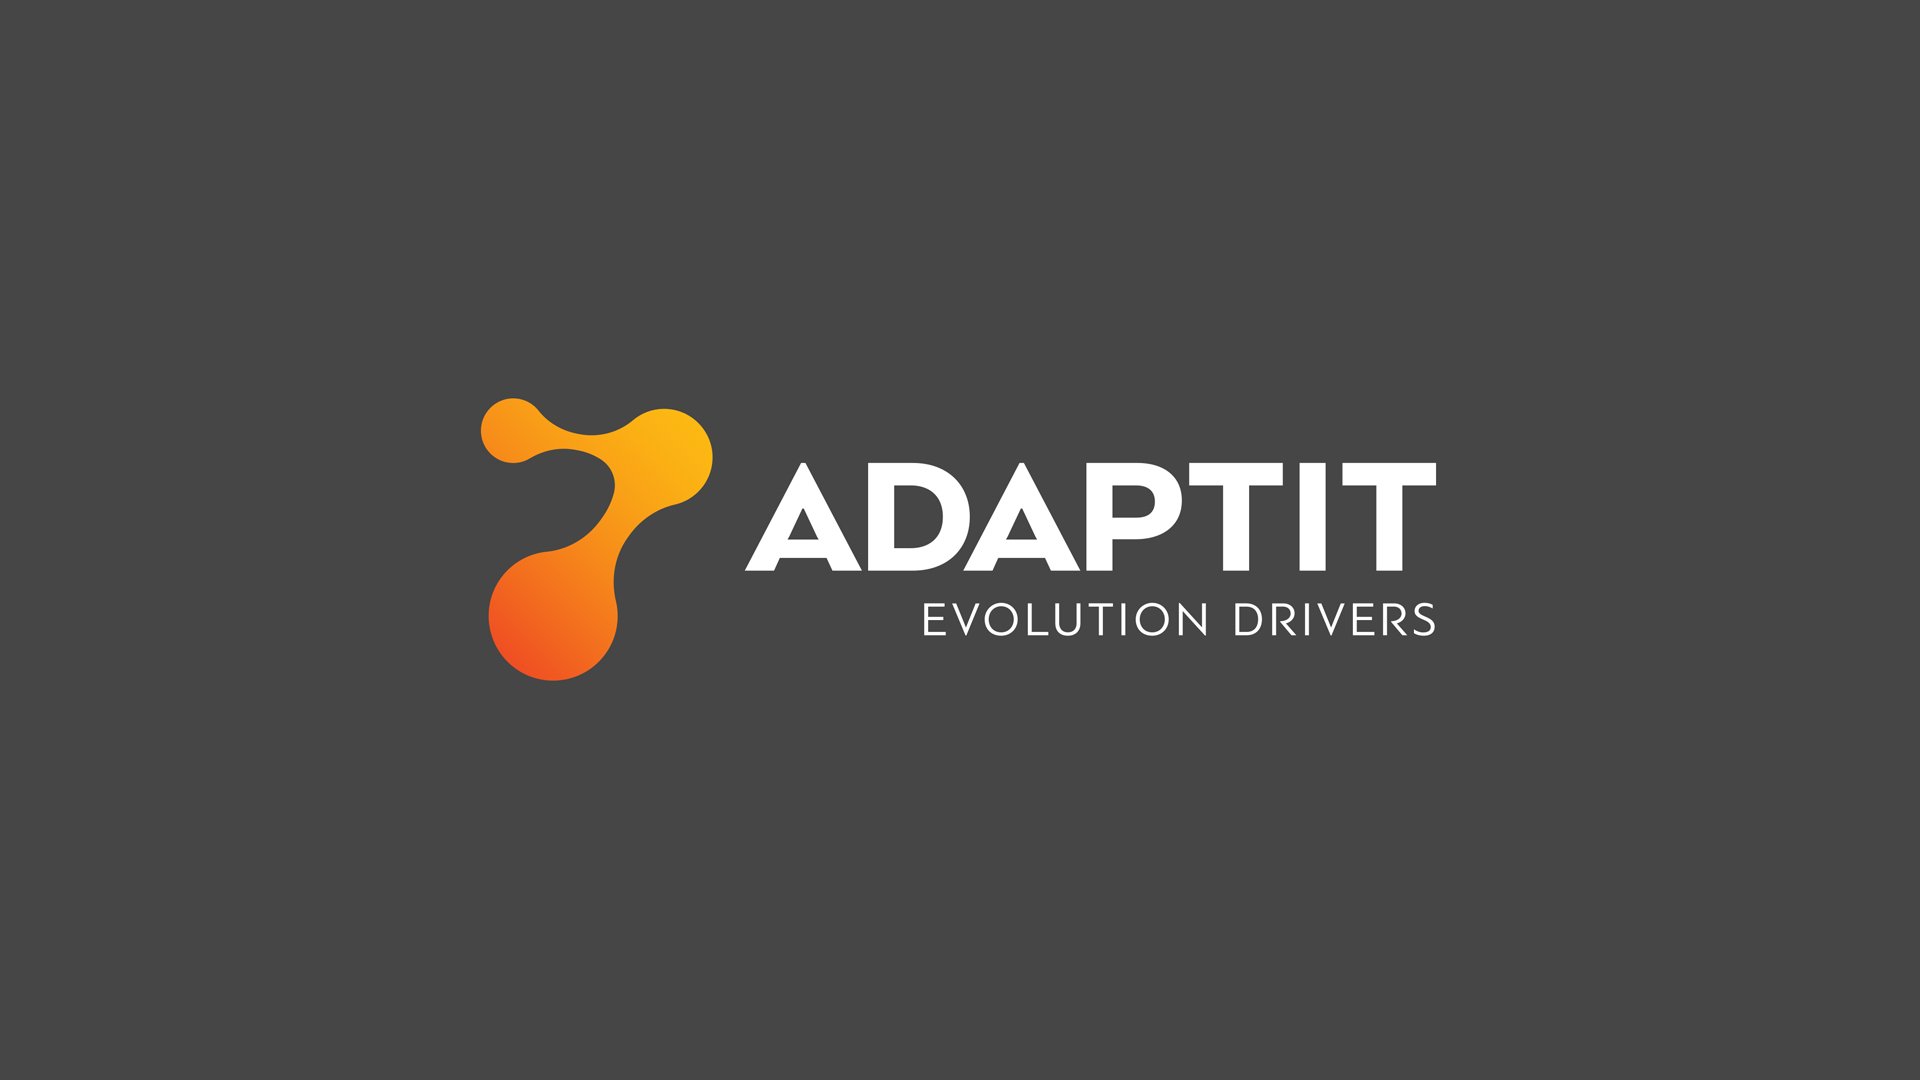 Adaptit new logo and corporate tagline: Evolution Drivers